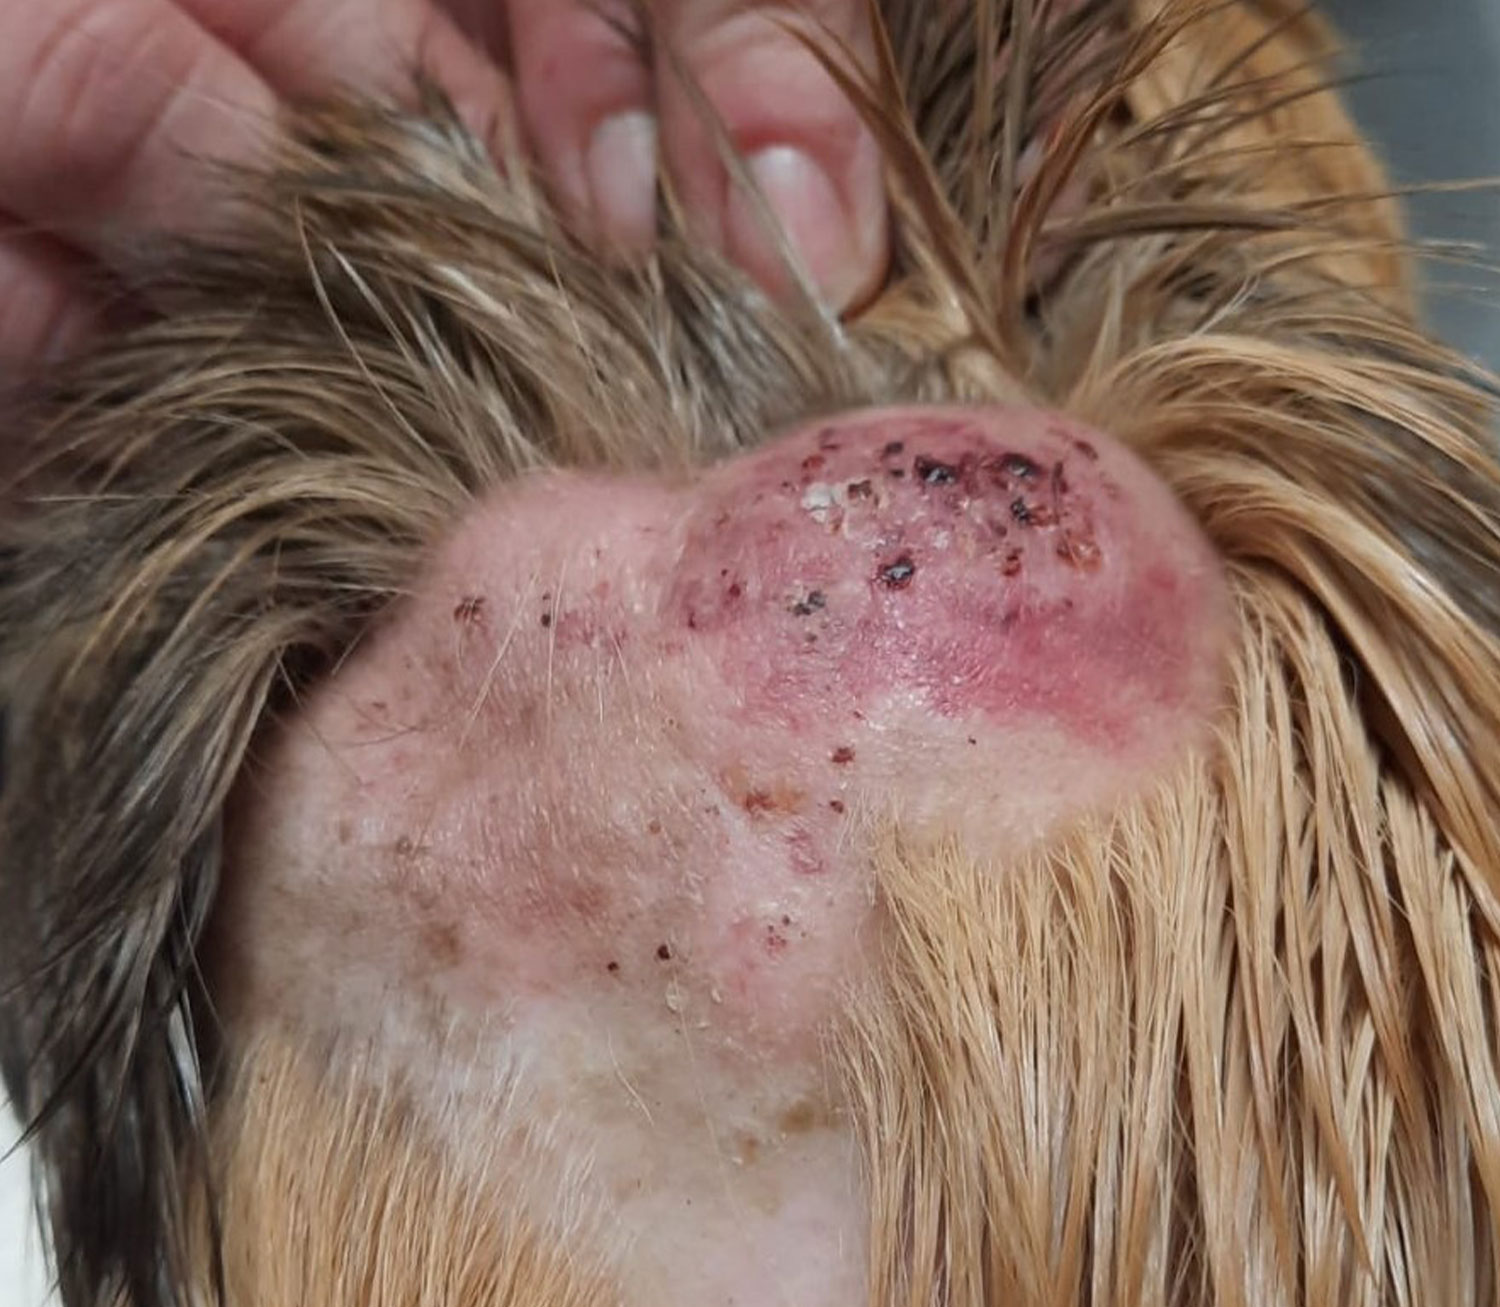 Laboklin: Guinea pig: cutaneous epitheliotropic lymphoma